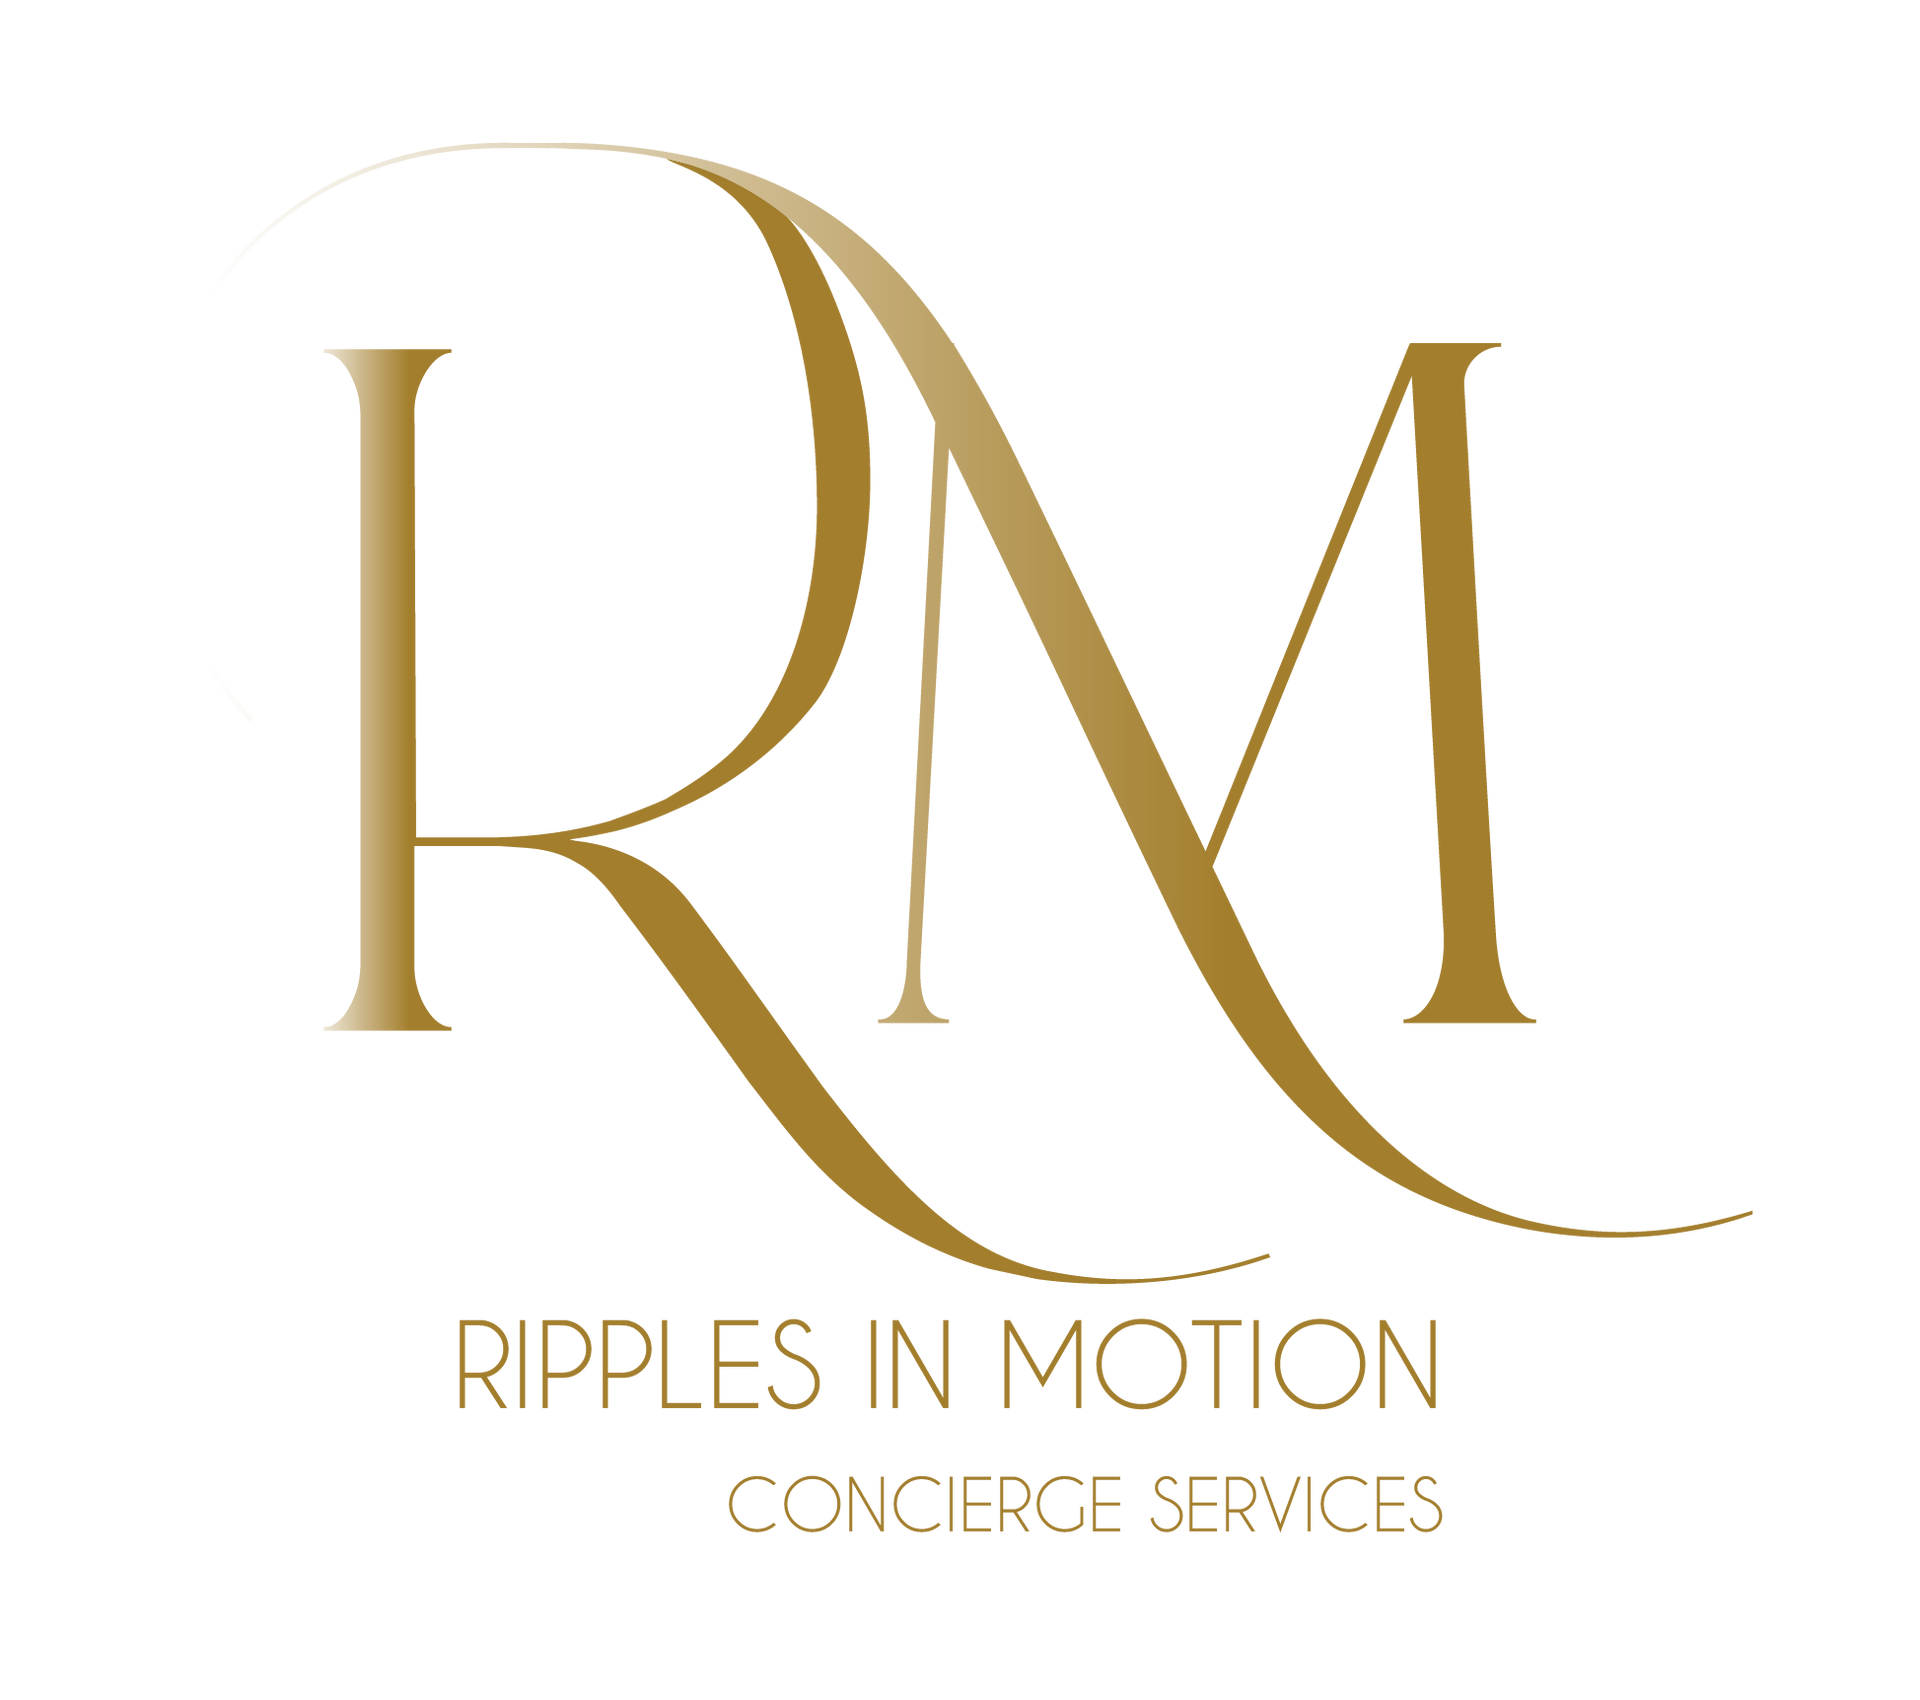 Ripples in Motion logo